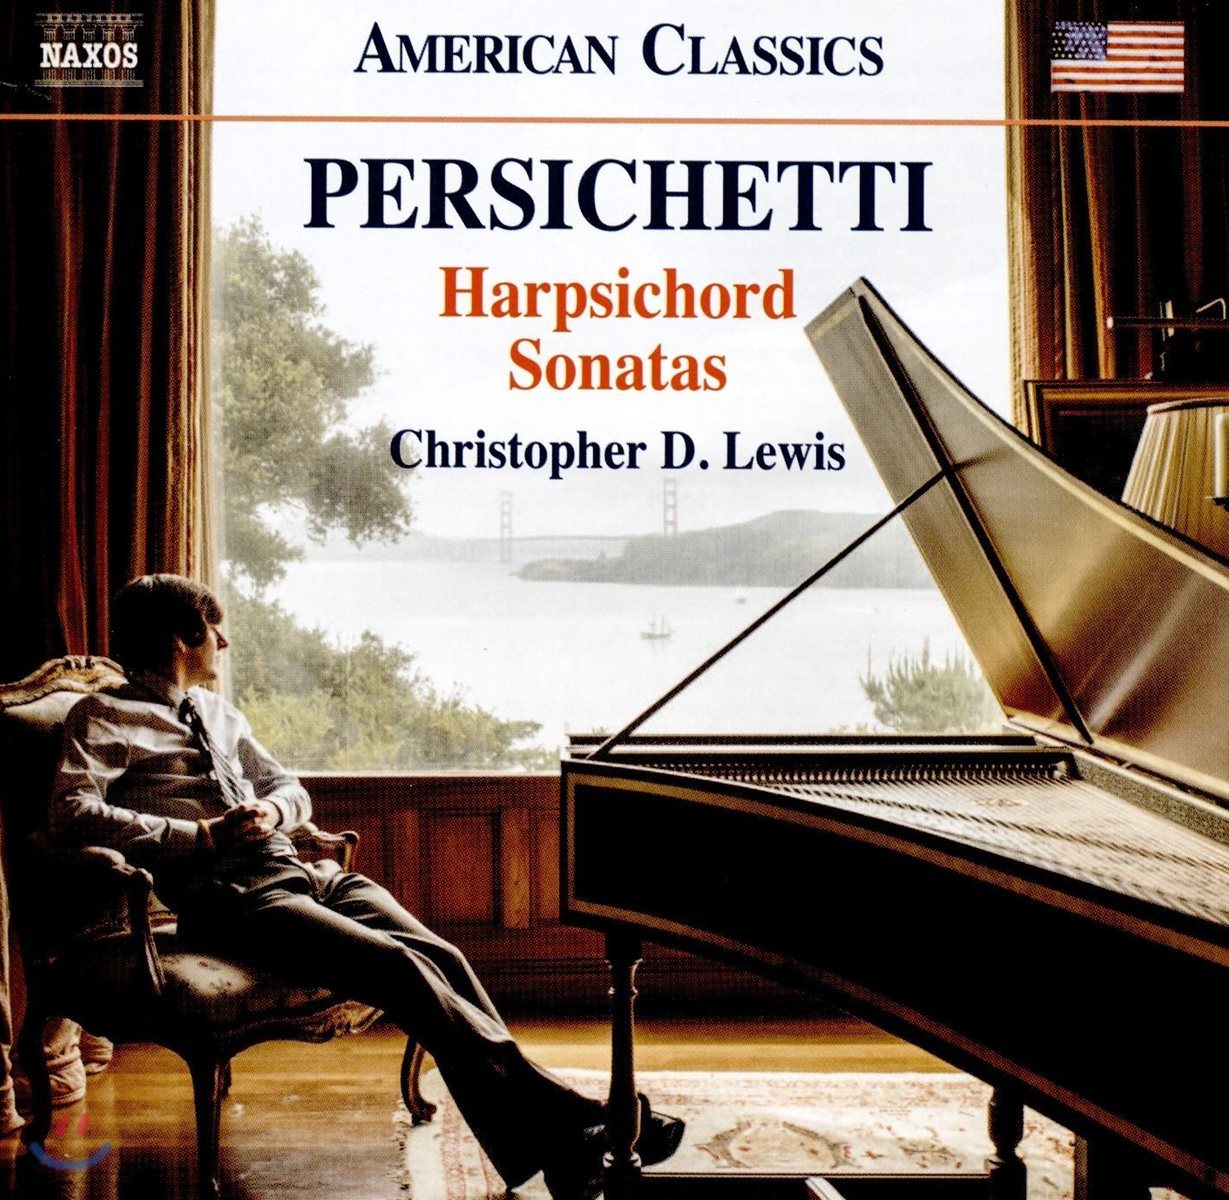 Christopher D. Lewis 빈센트 퍼시케티: 하프시코드 소나타 1, 3, 5, 8 & 9번, 세레나데 15번 - 크리스토퍼 D. 루이스 (Vincent Persichetti: Harpsichord Sonatas)